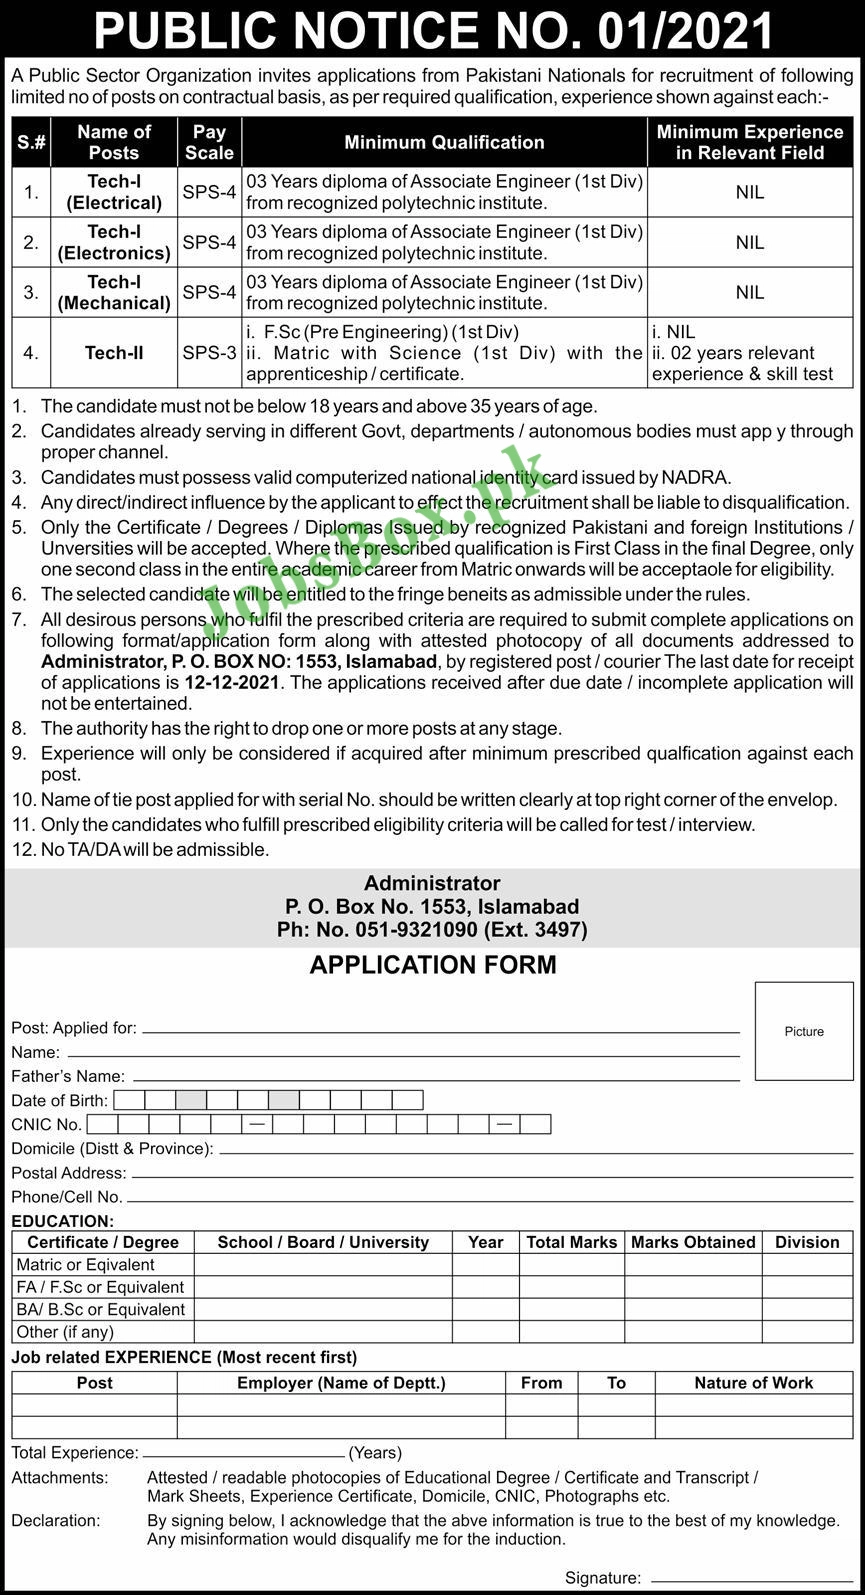 Public Sector Organization Islamabad Jobs 2021 in PO Box 1553